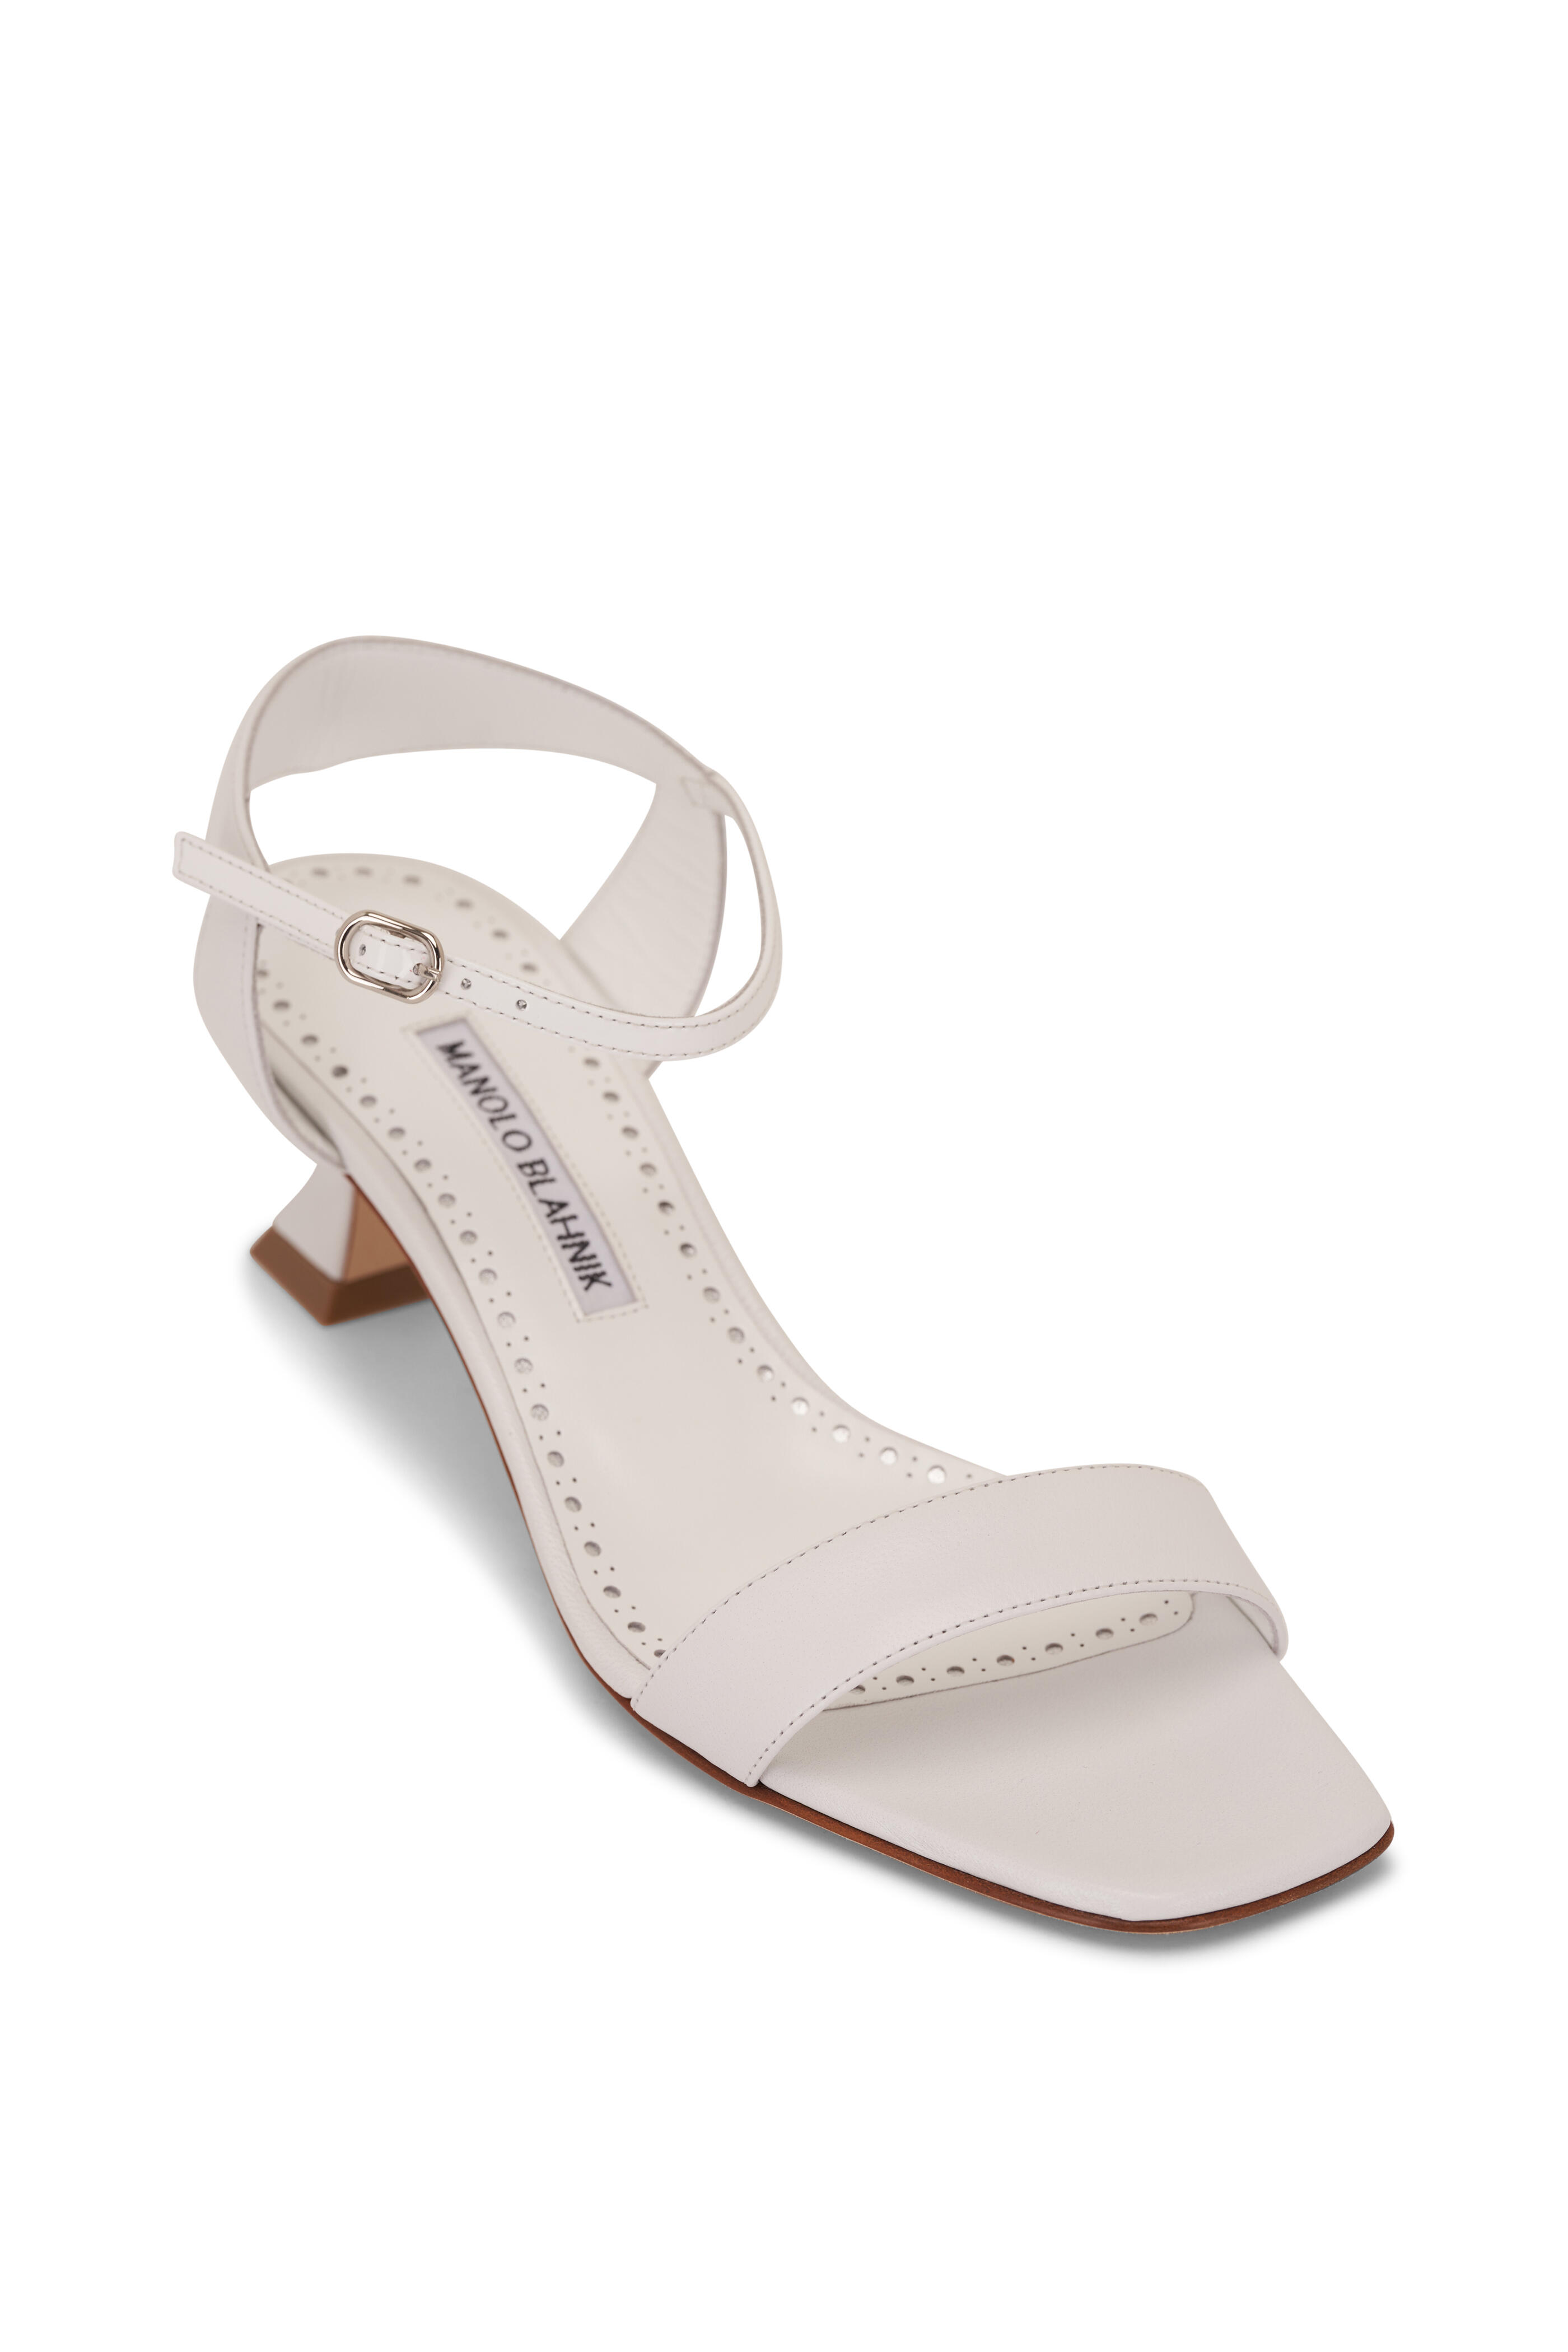 Manolo Blahnik - Begasan White Leather Sandal, 50mm